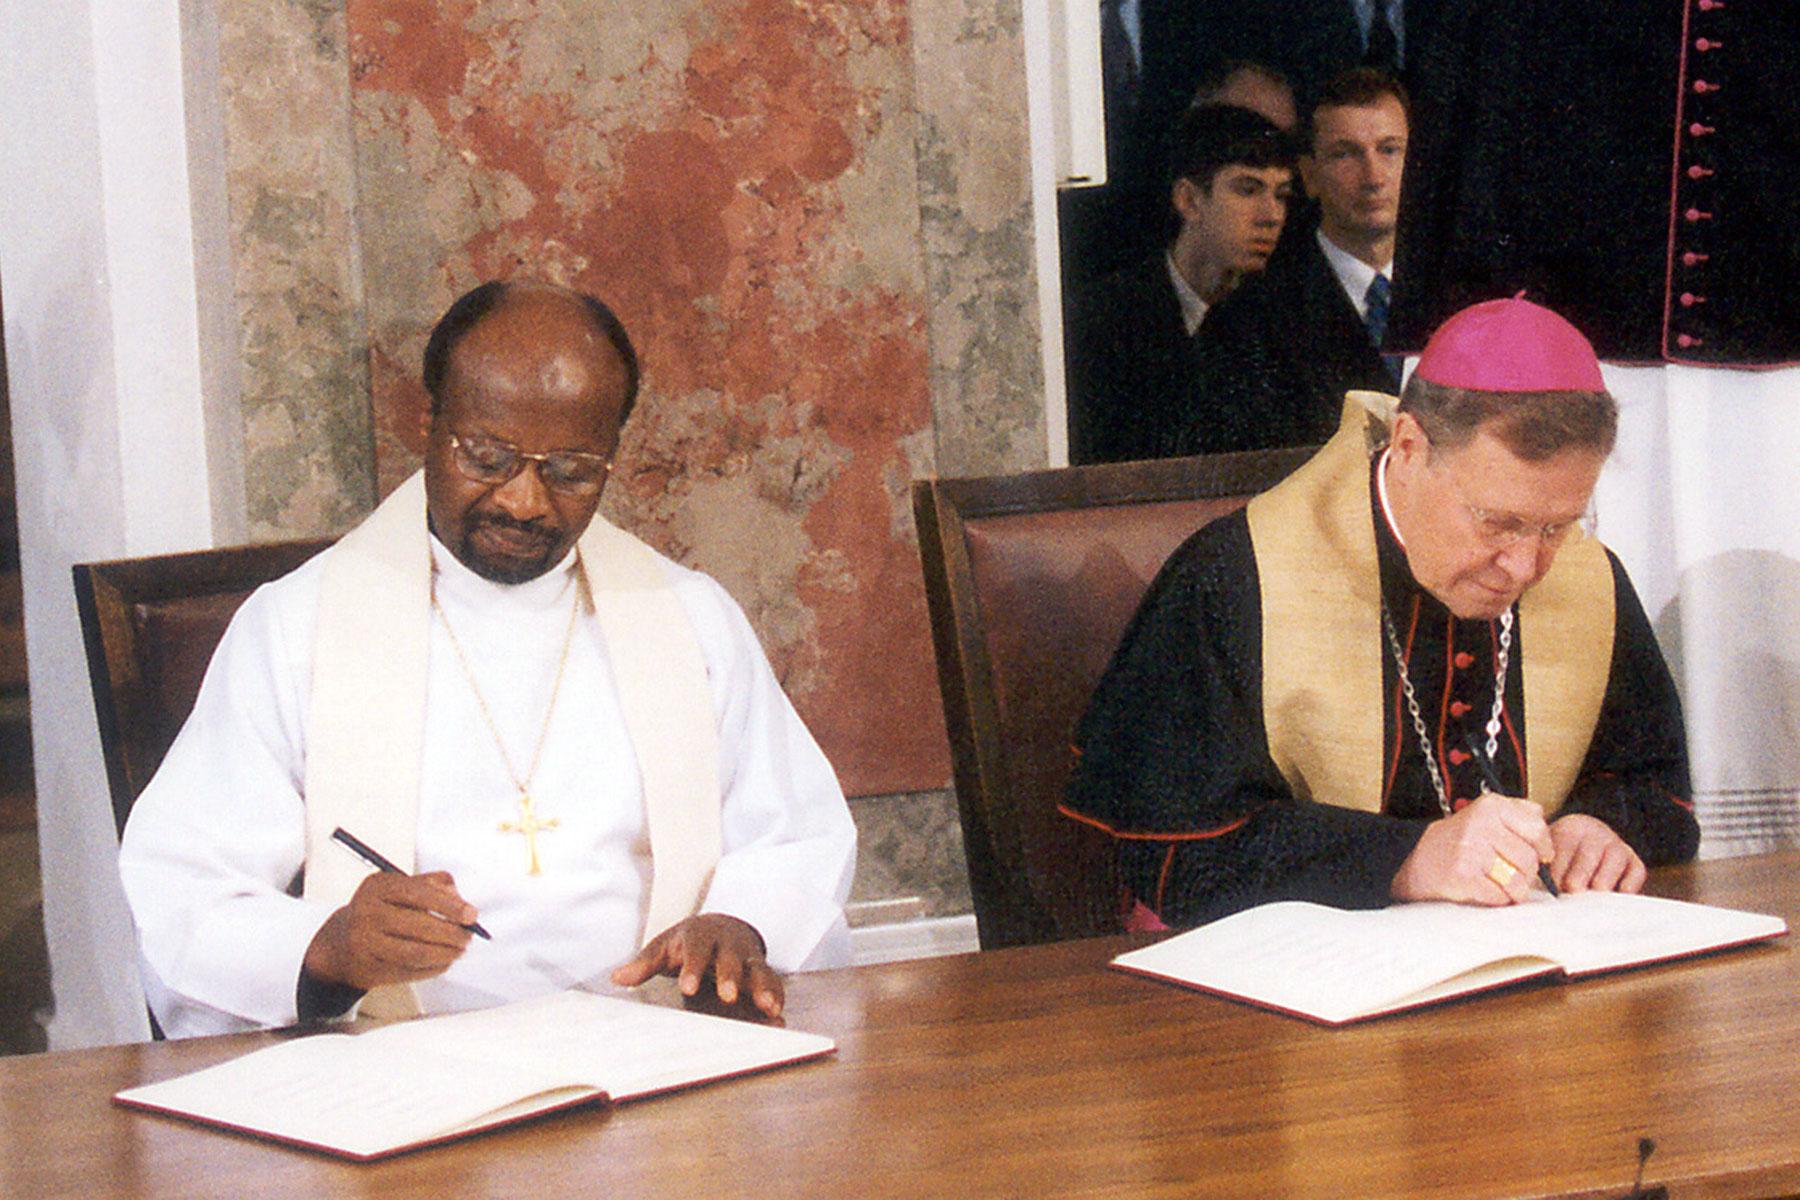 From left: The Rev. Dr Ishmael Noko and Bishop Dr Walter Kasper signing the Joint Declaration on the Doctrine of Justification (JDDJ). Photo: LWF/K. Wieckhorst